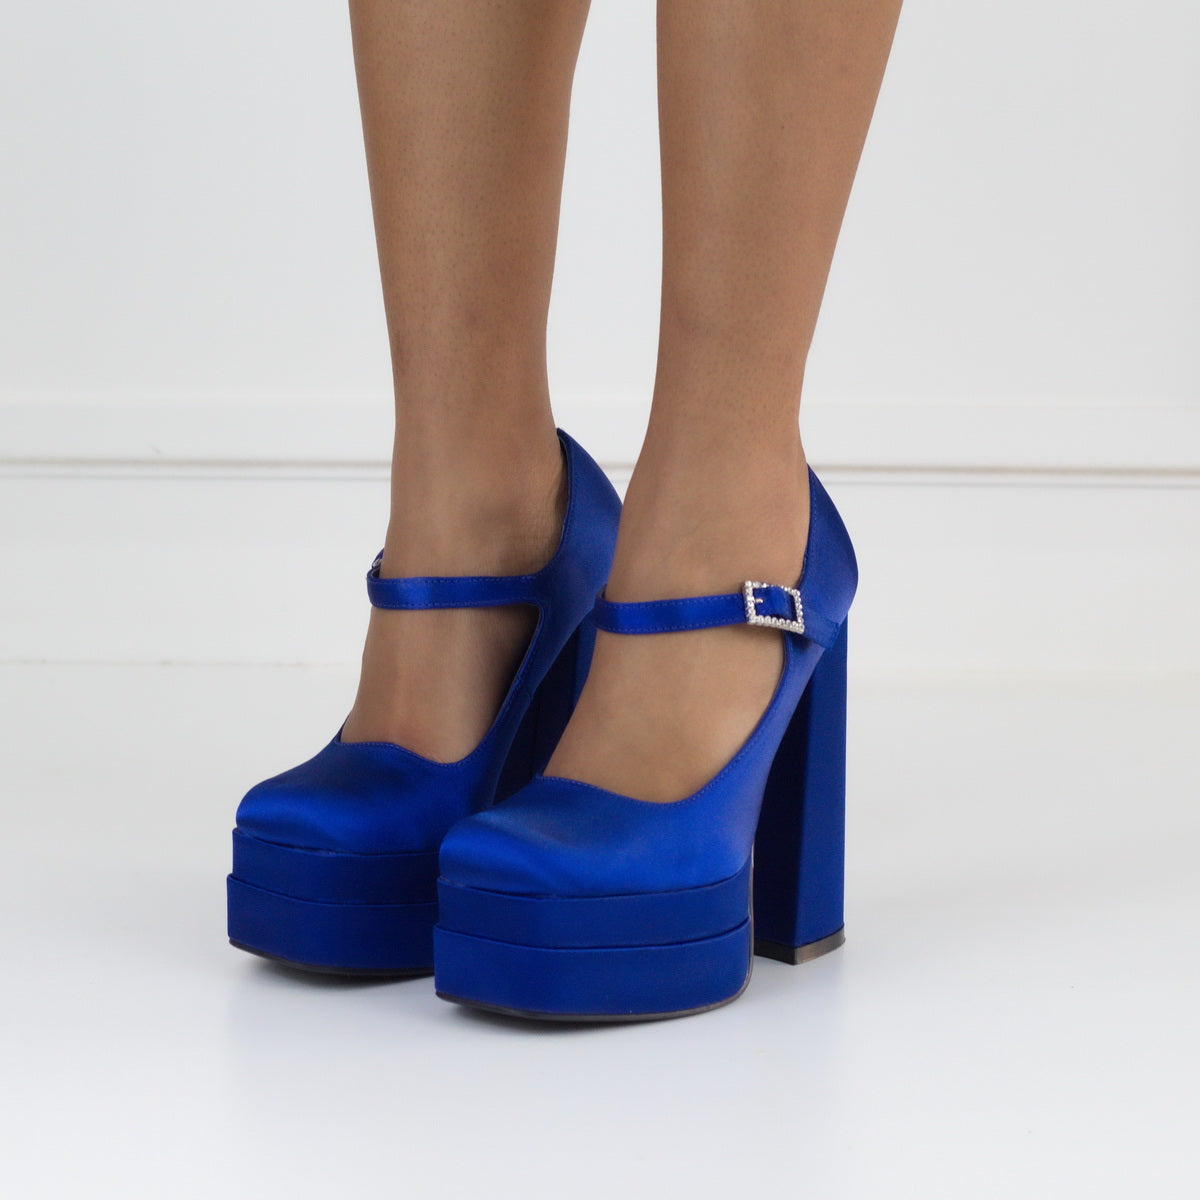 Pippa 14.5cm platform heel Funky ankle strap pump royal blue